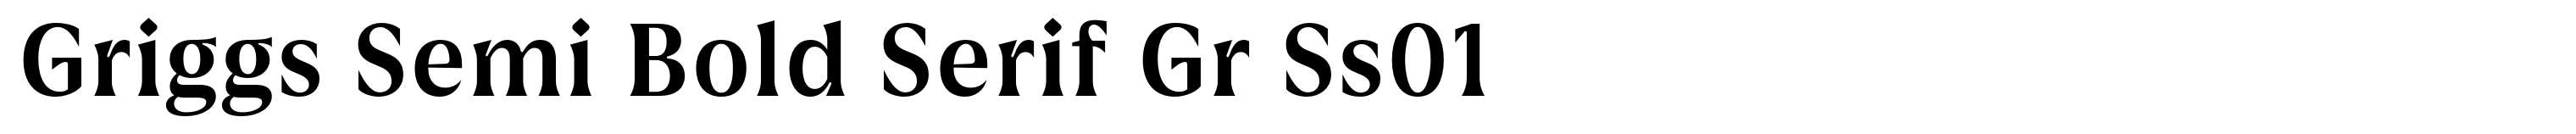 Griggs Semi Bold Serif Gr Ss01